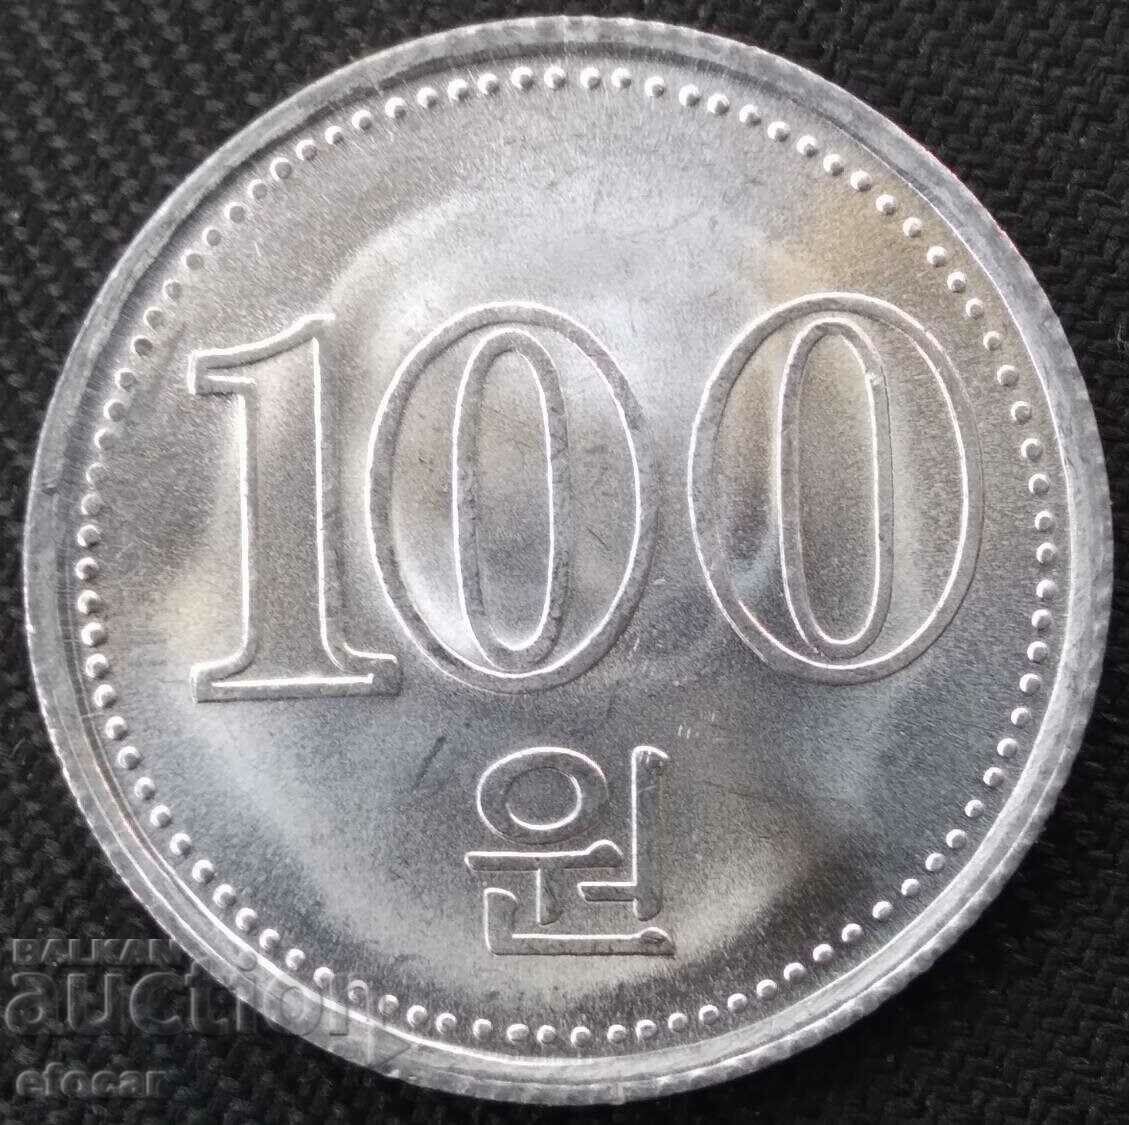 100 won Republic of Korea 2005